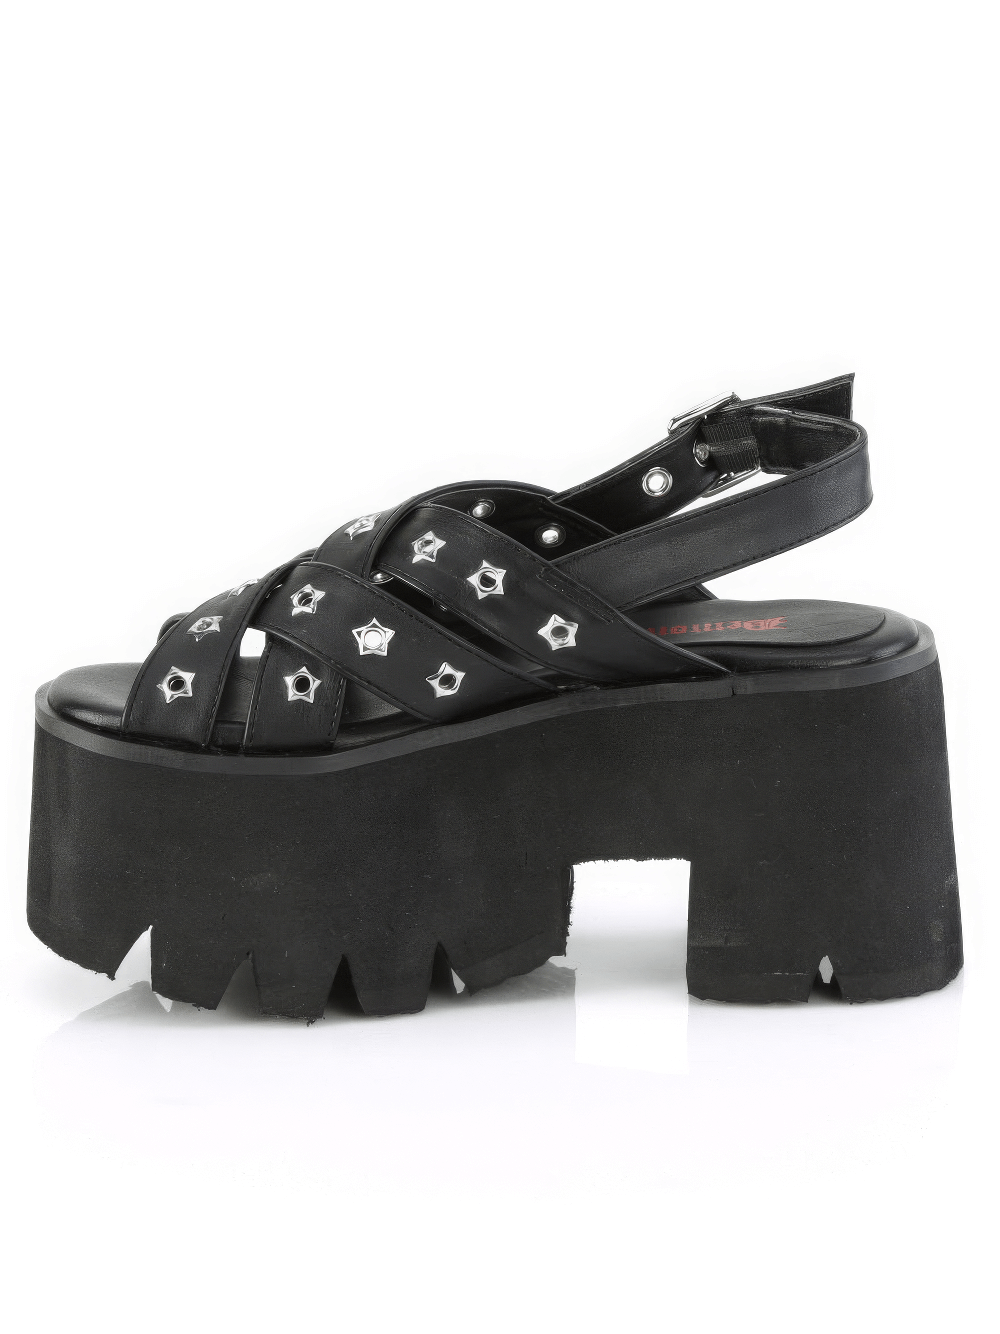 DEMONIA Edgy Strappy Platform Sandals with Star Eyelets